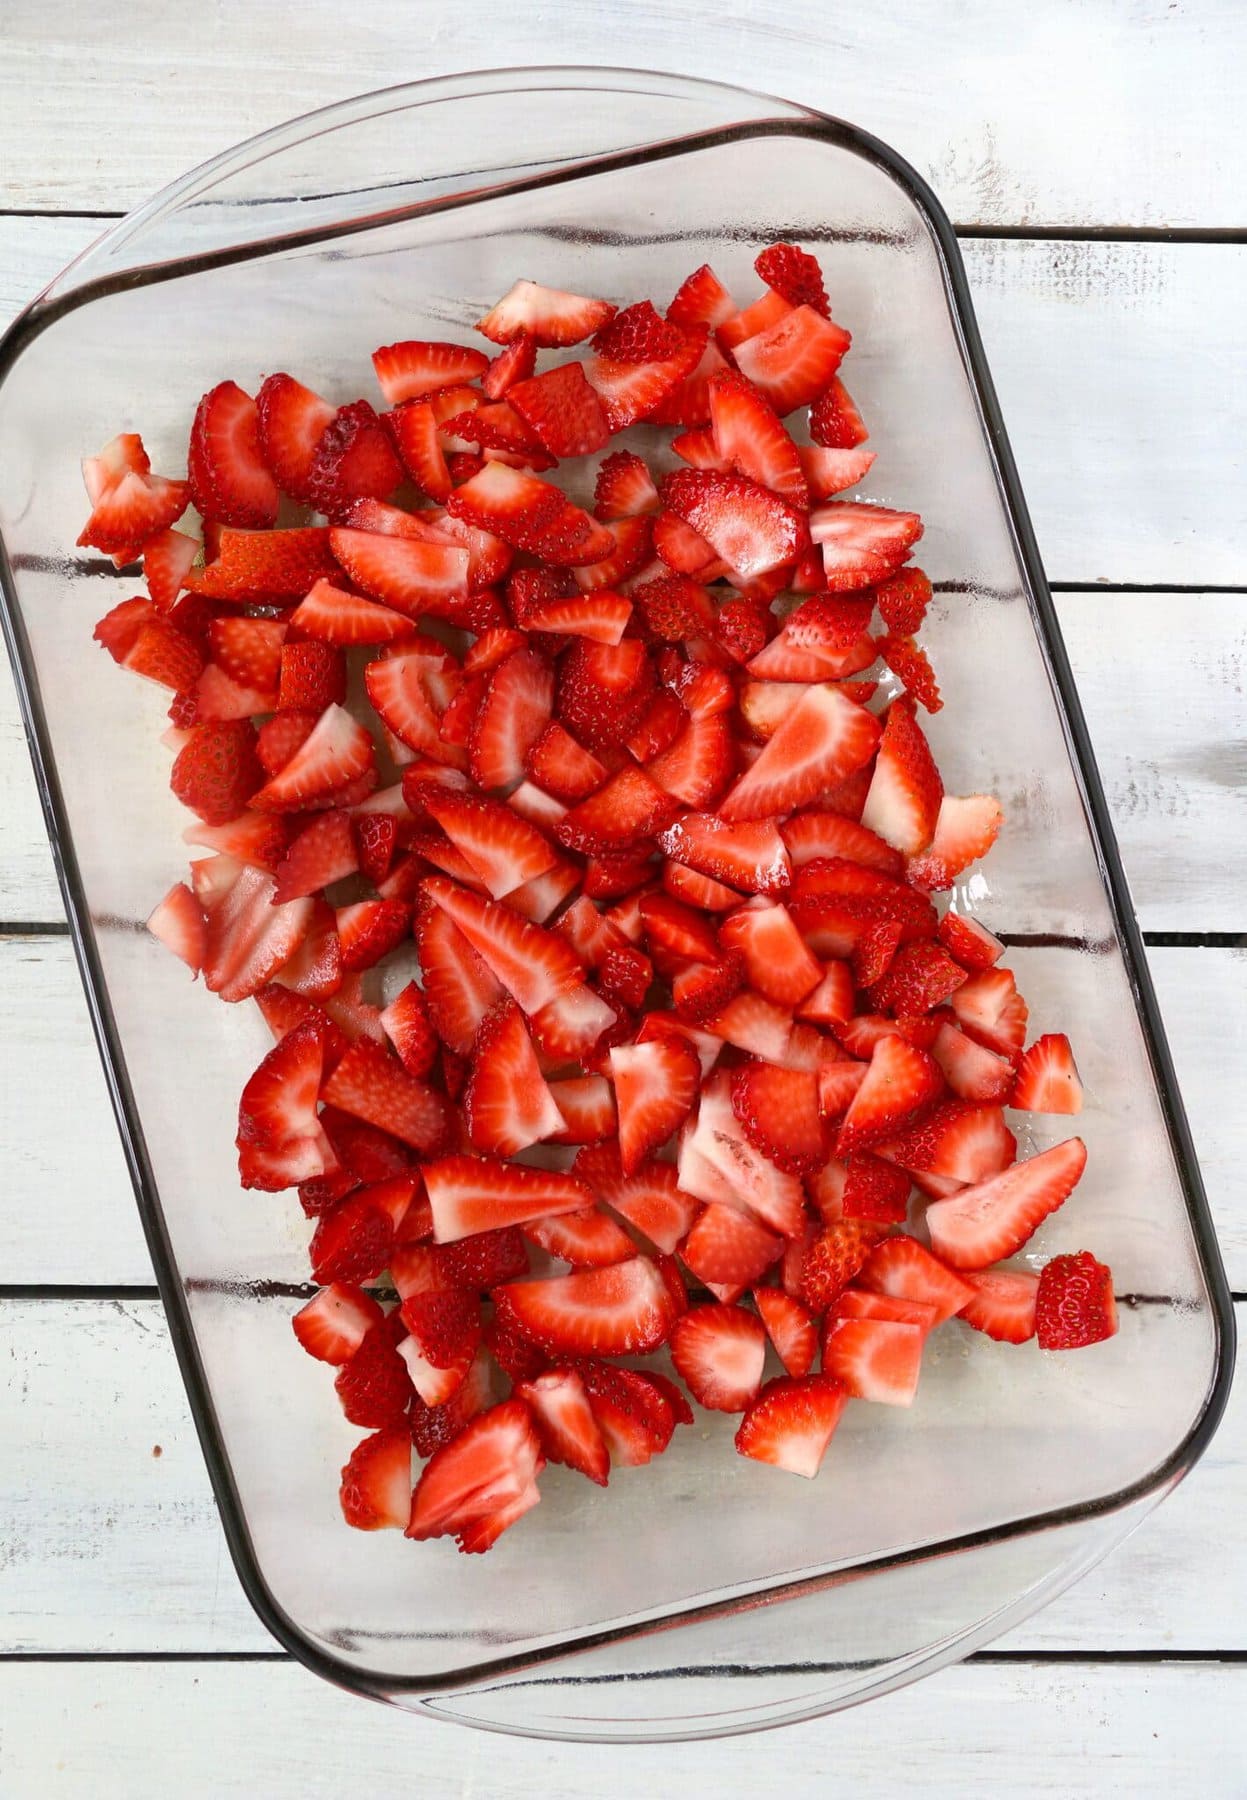 Adding the strawberries.